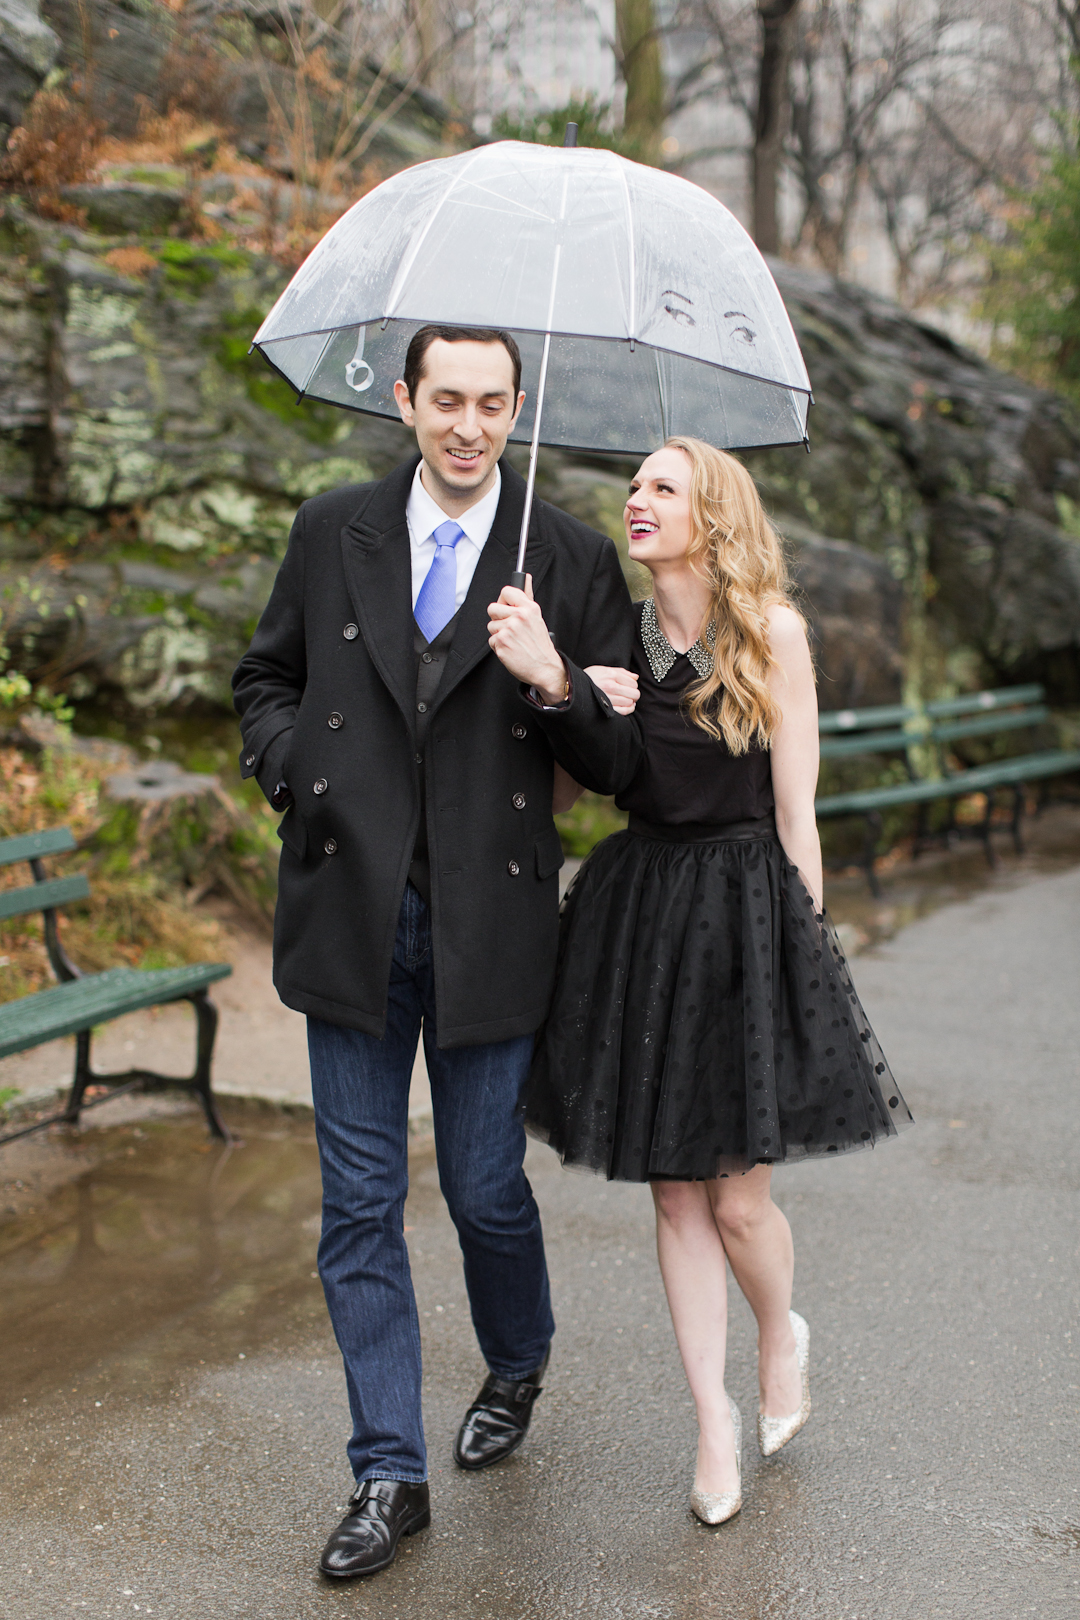 Melissa Kruse Photography - Jenna & Evan Central Park NYC Engagement Photos-40.jpg